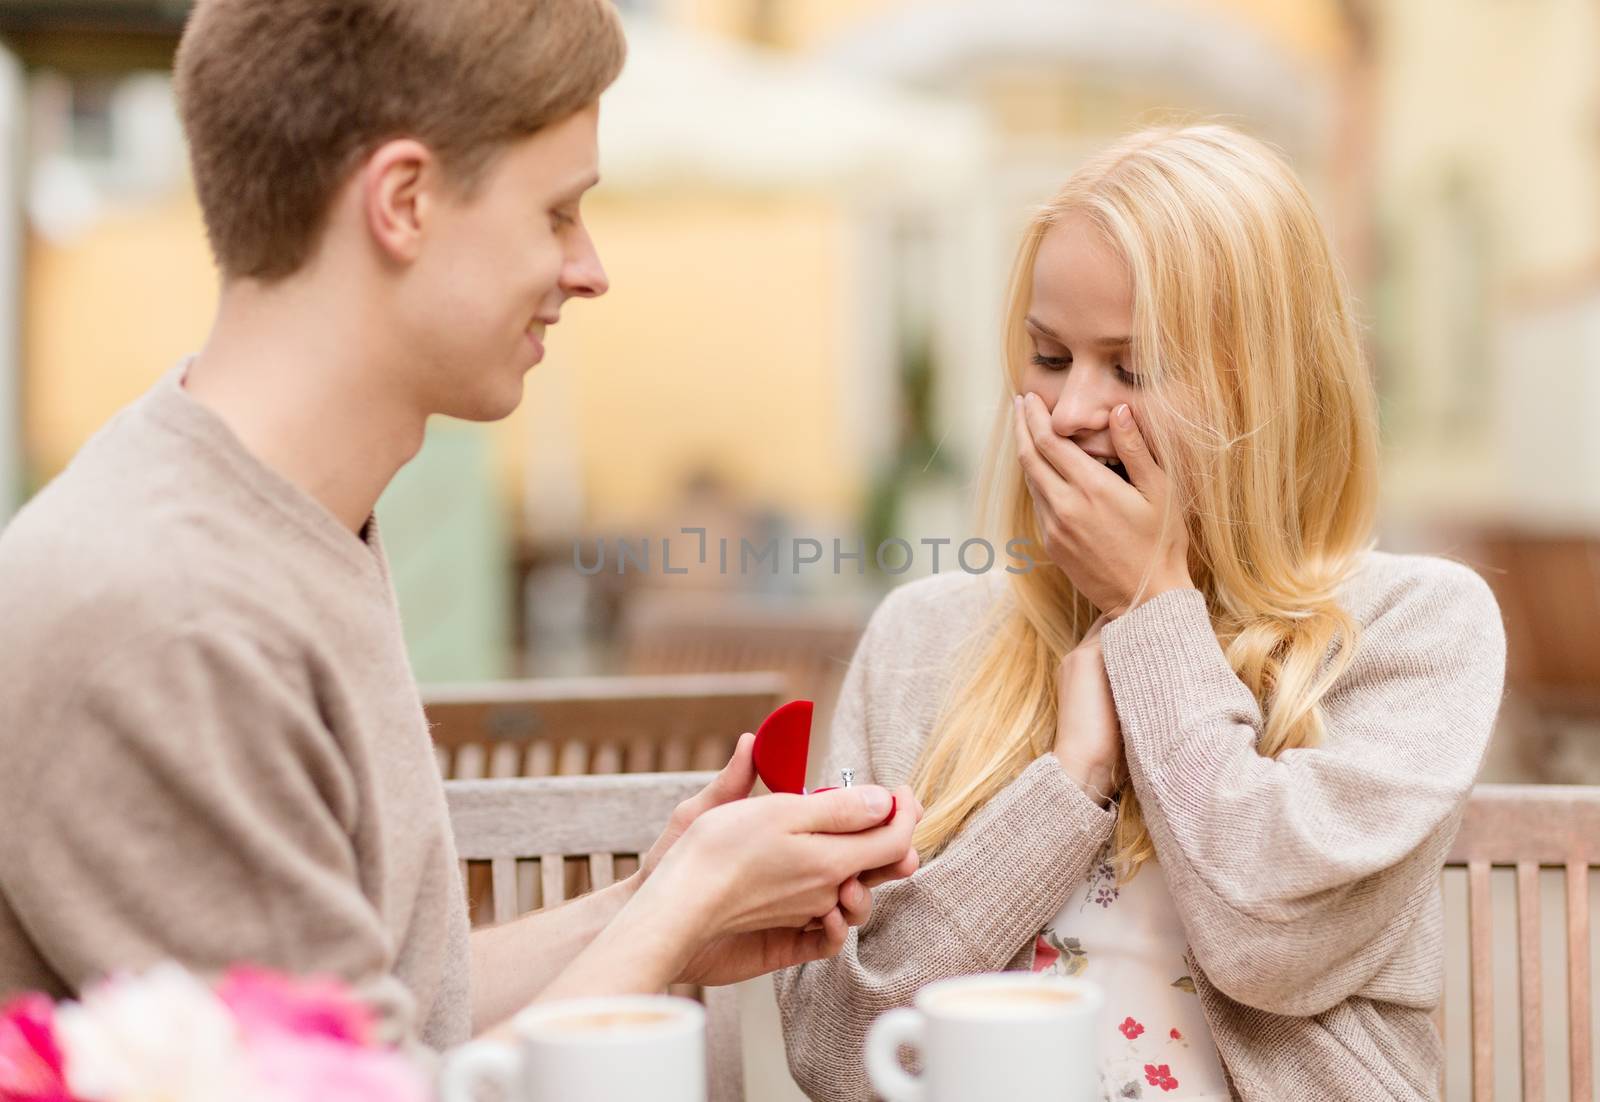 romantic man proposing to beautiful woman by dolgachov